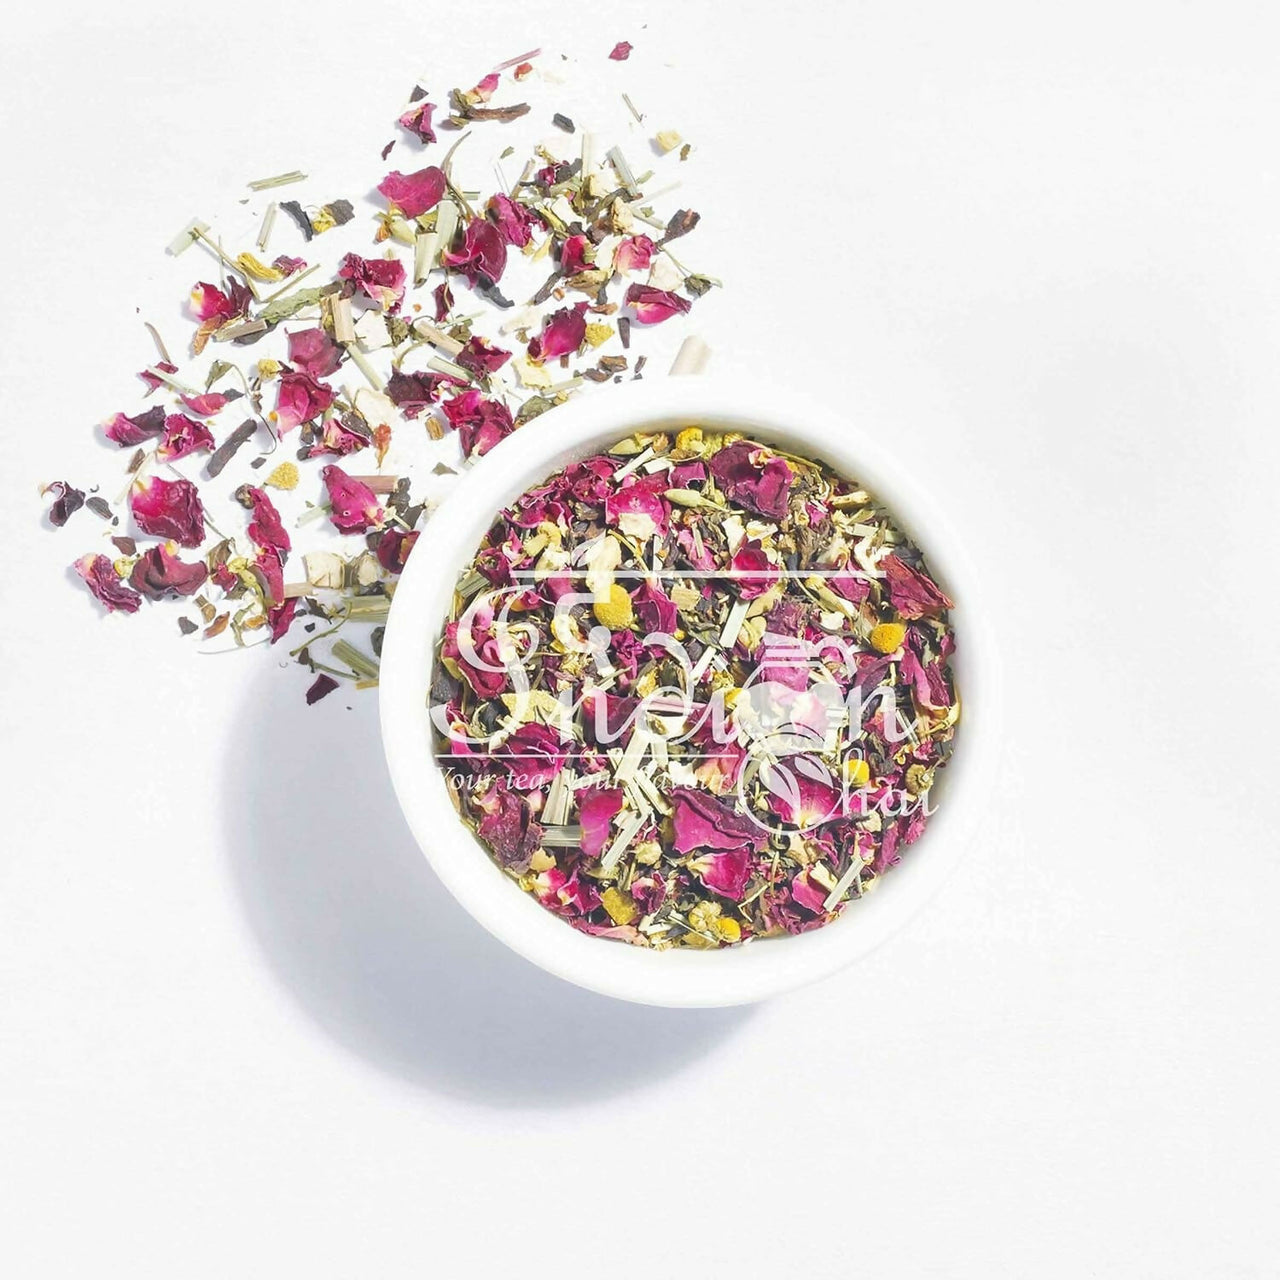 The Indian Chai - Hibiscus Floral Tea - Distacart